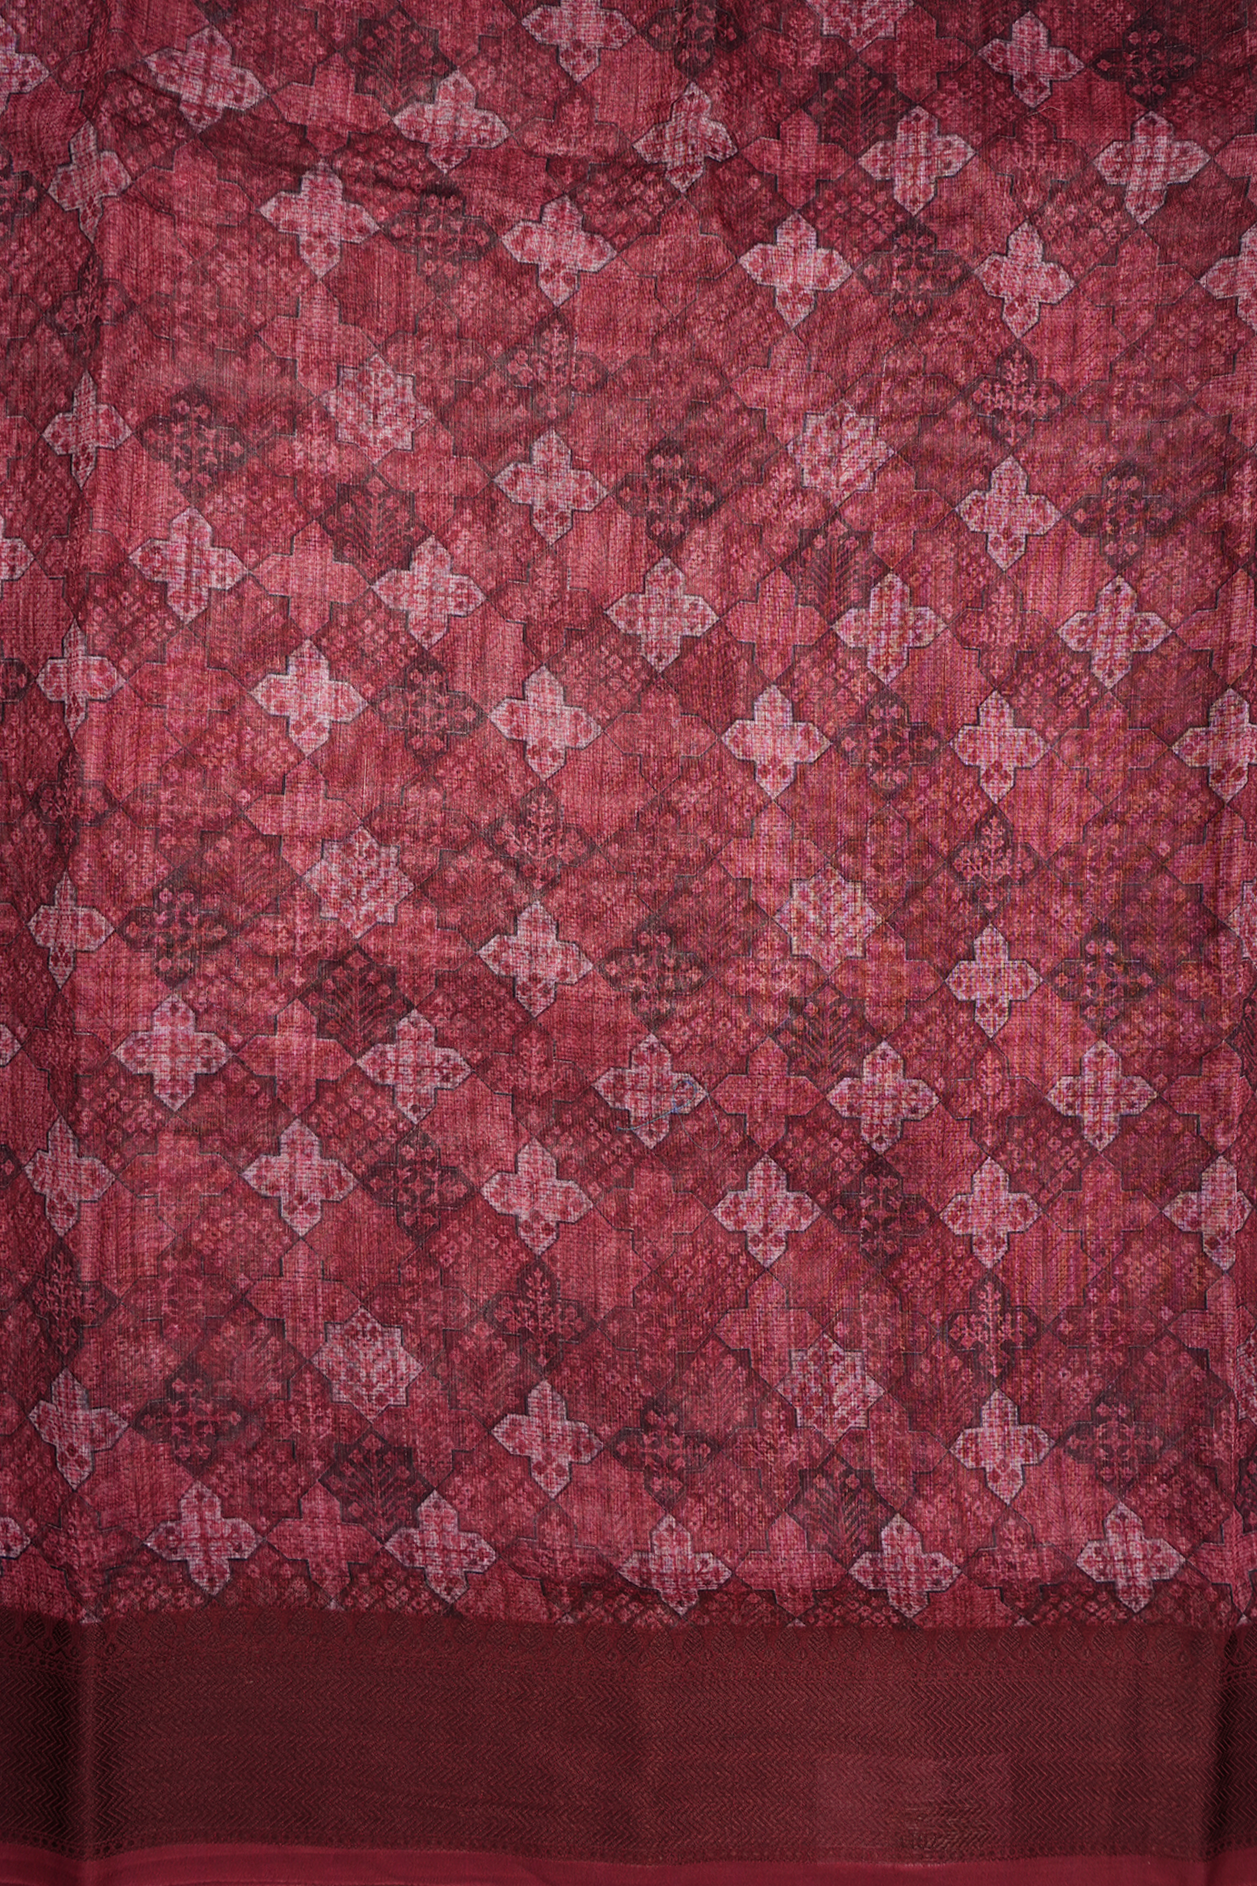 Allover Printed Design Shades Of Red Chanderi Cotton Saree